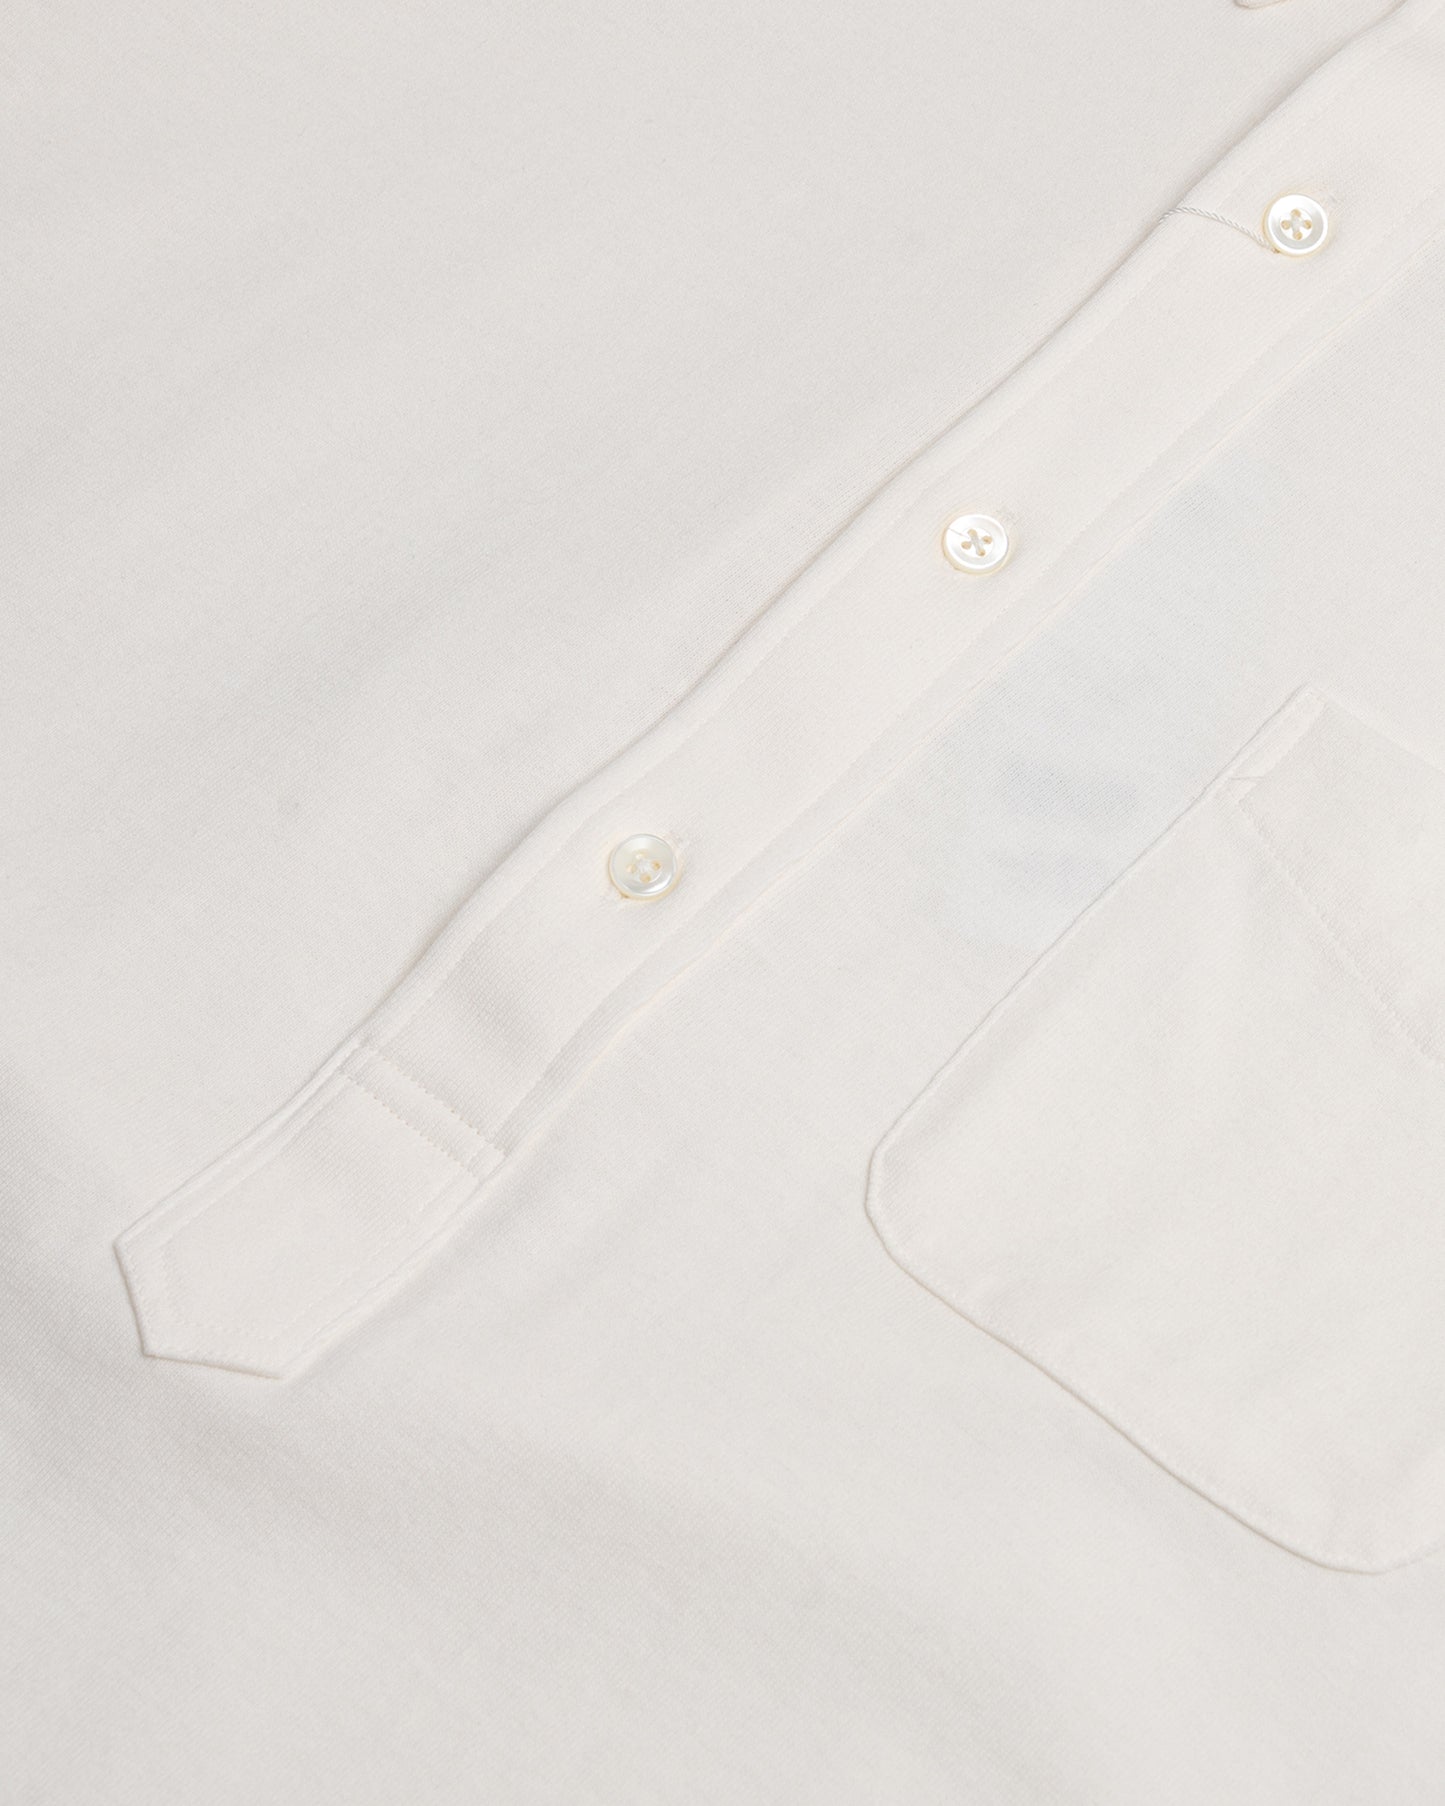 Kamakura Vintage Ivy White Button Down Shirt